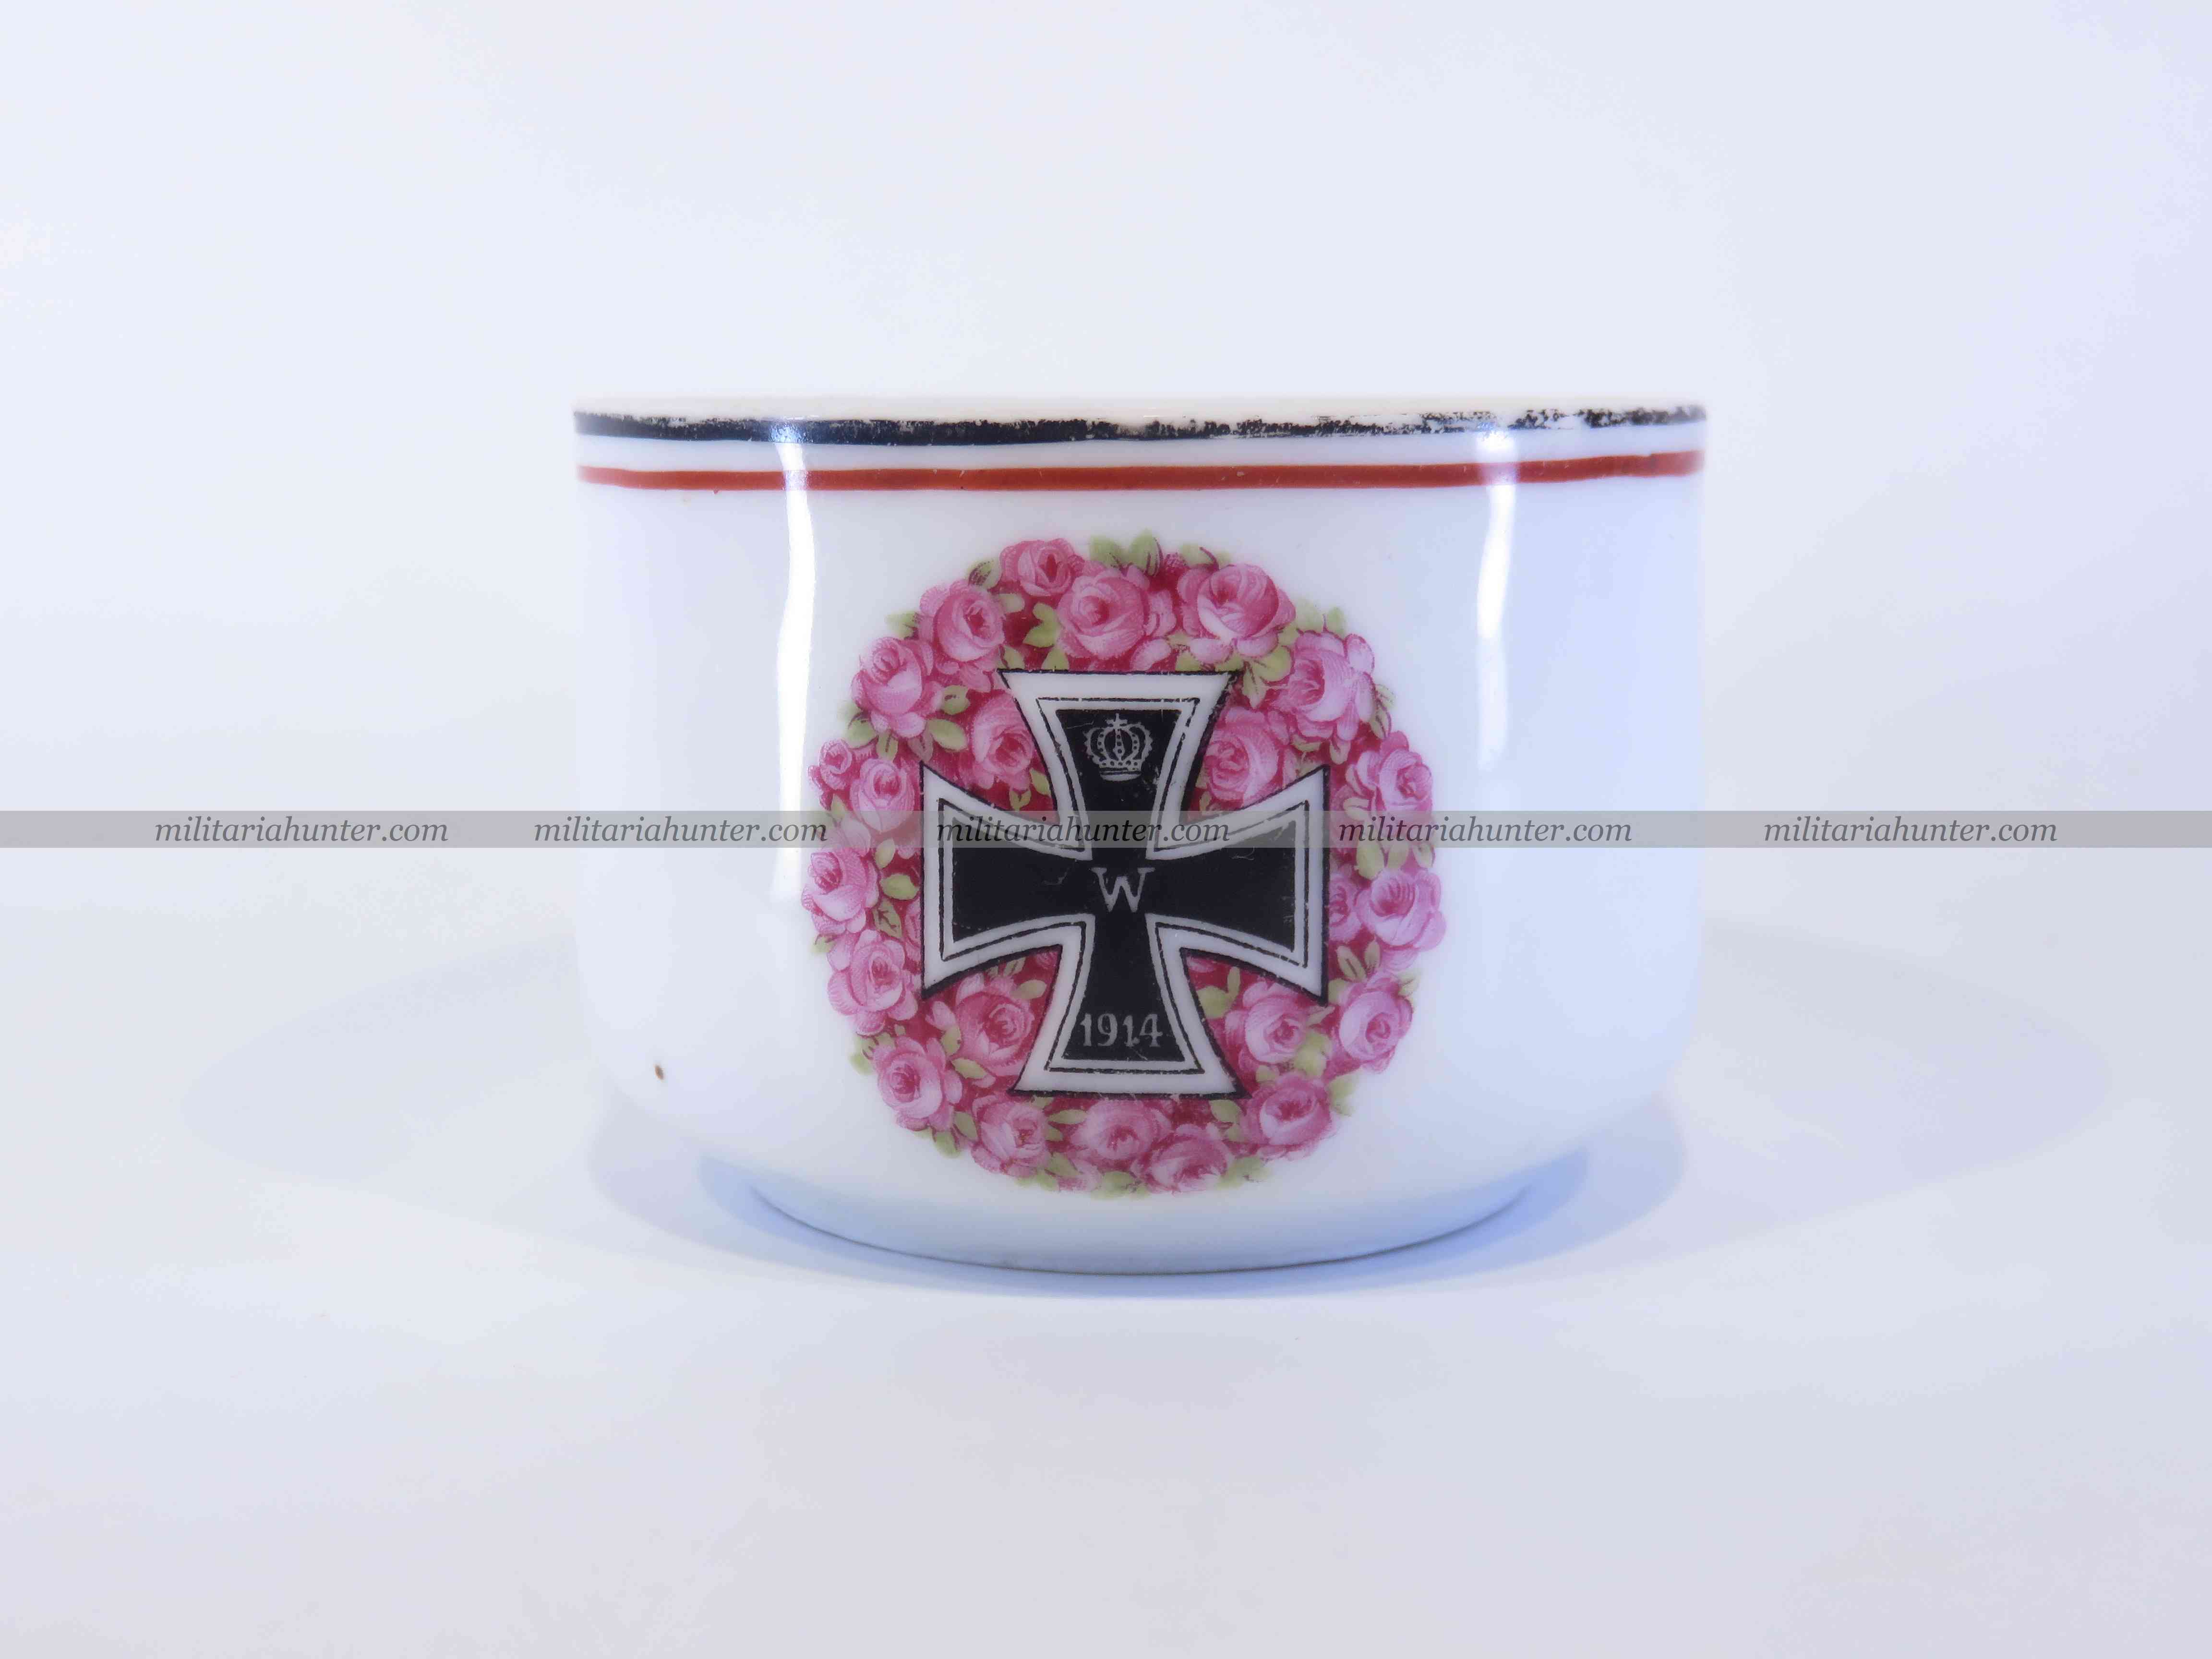 militaria : Tasse patriotique croix de fer 1914 - ww1 german iron cross cup